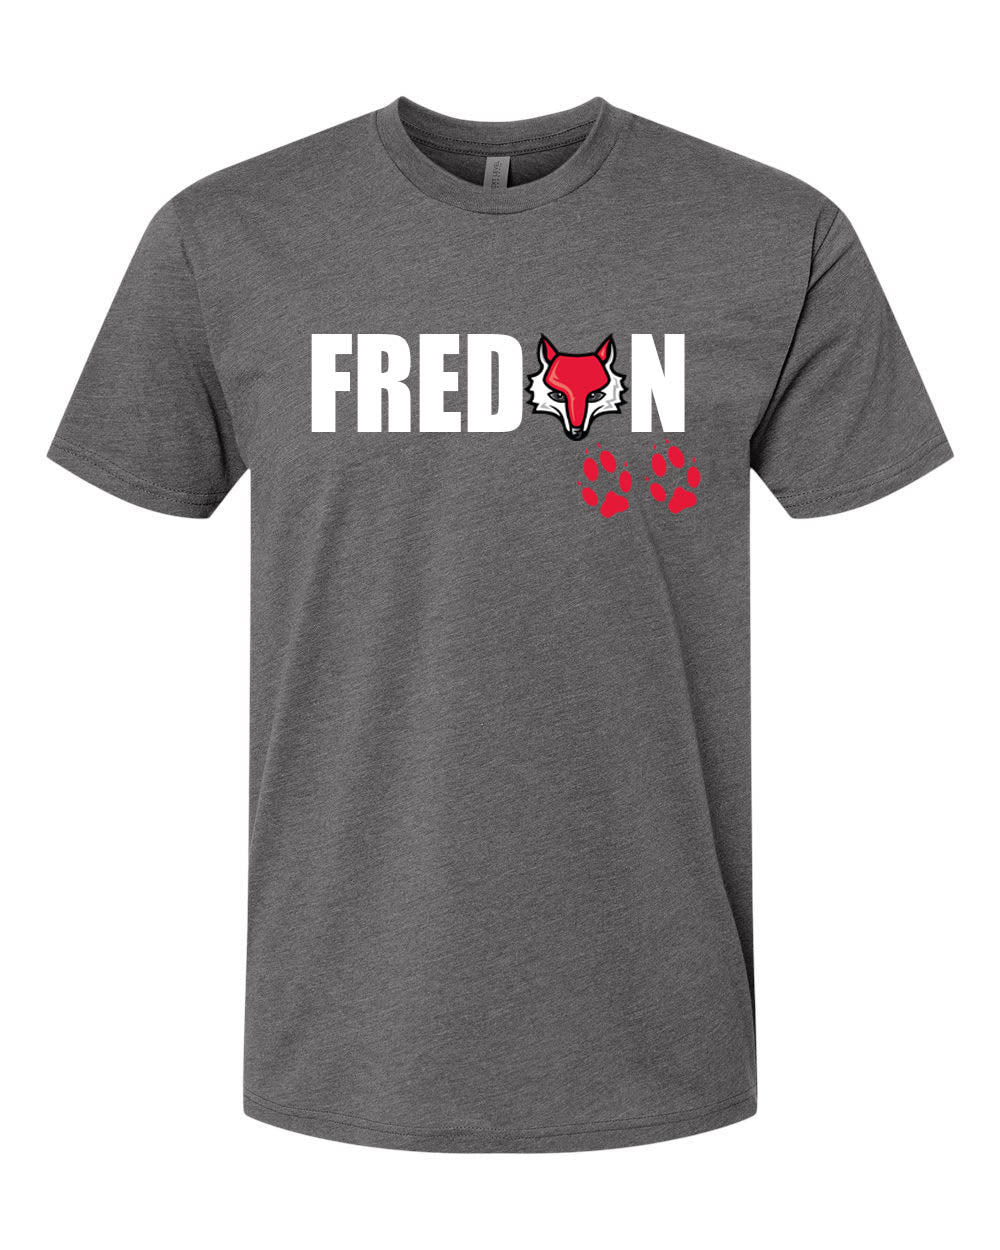 Fredon Design 6 T-Shirt